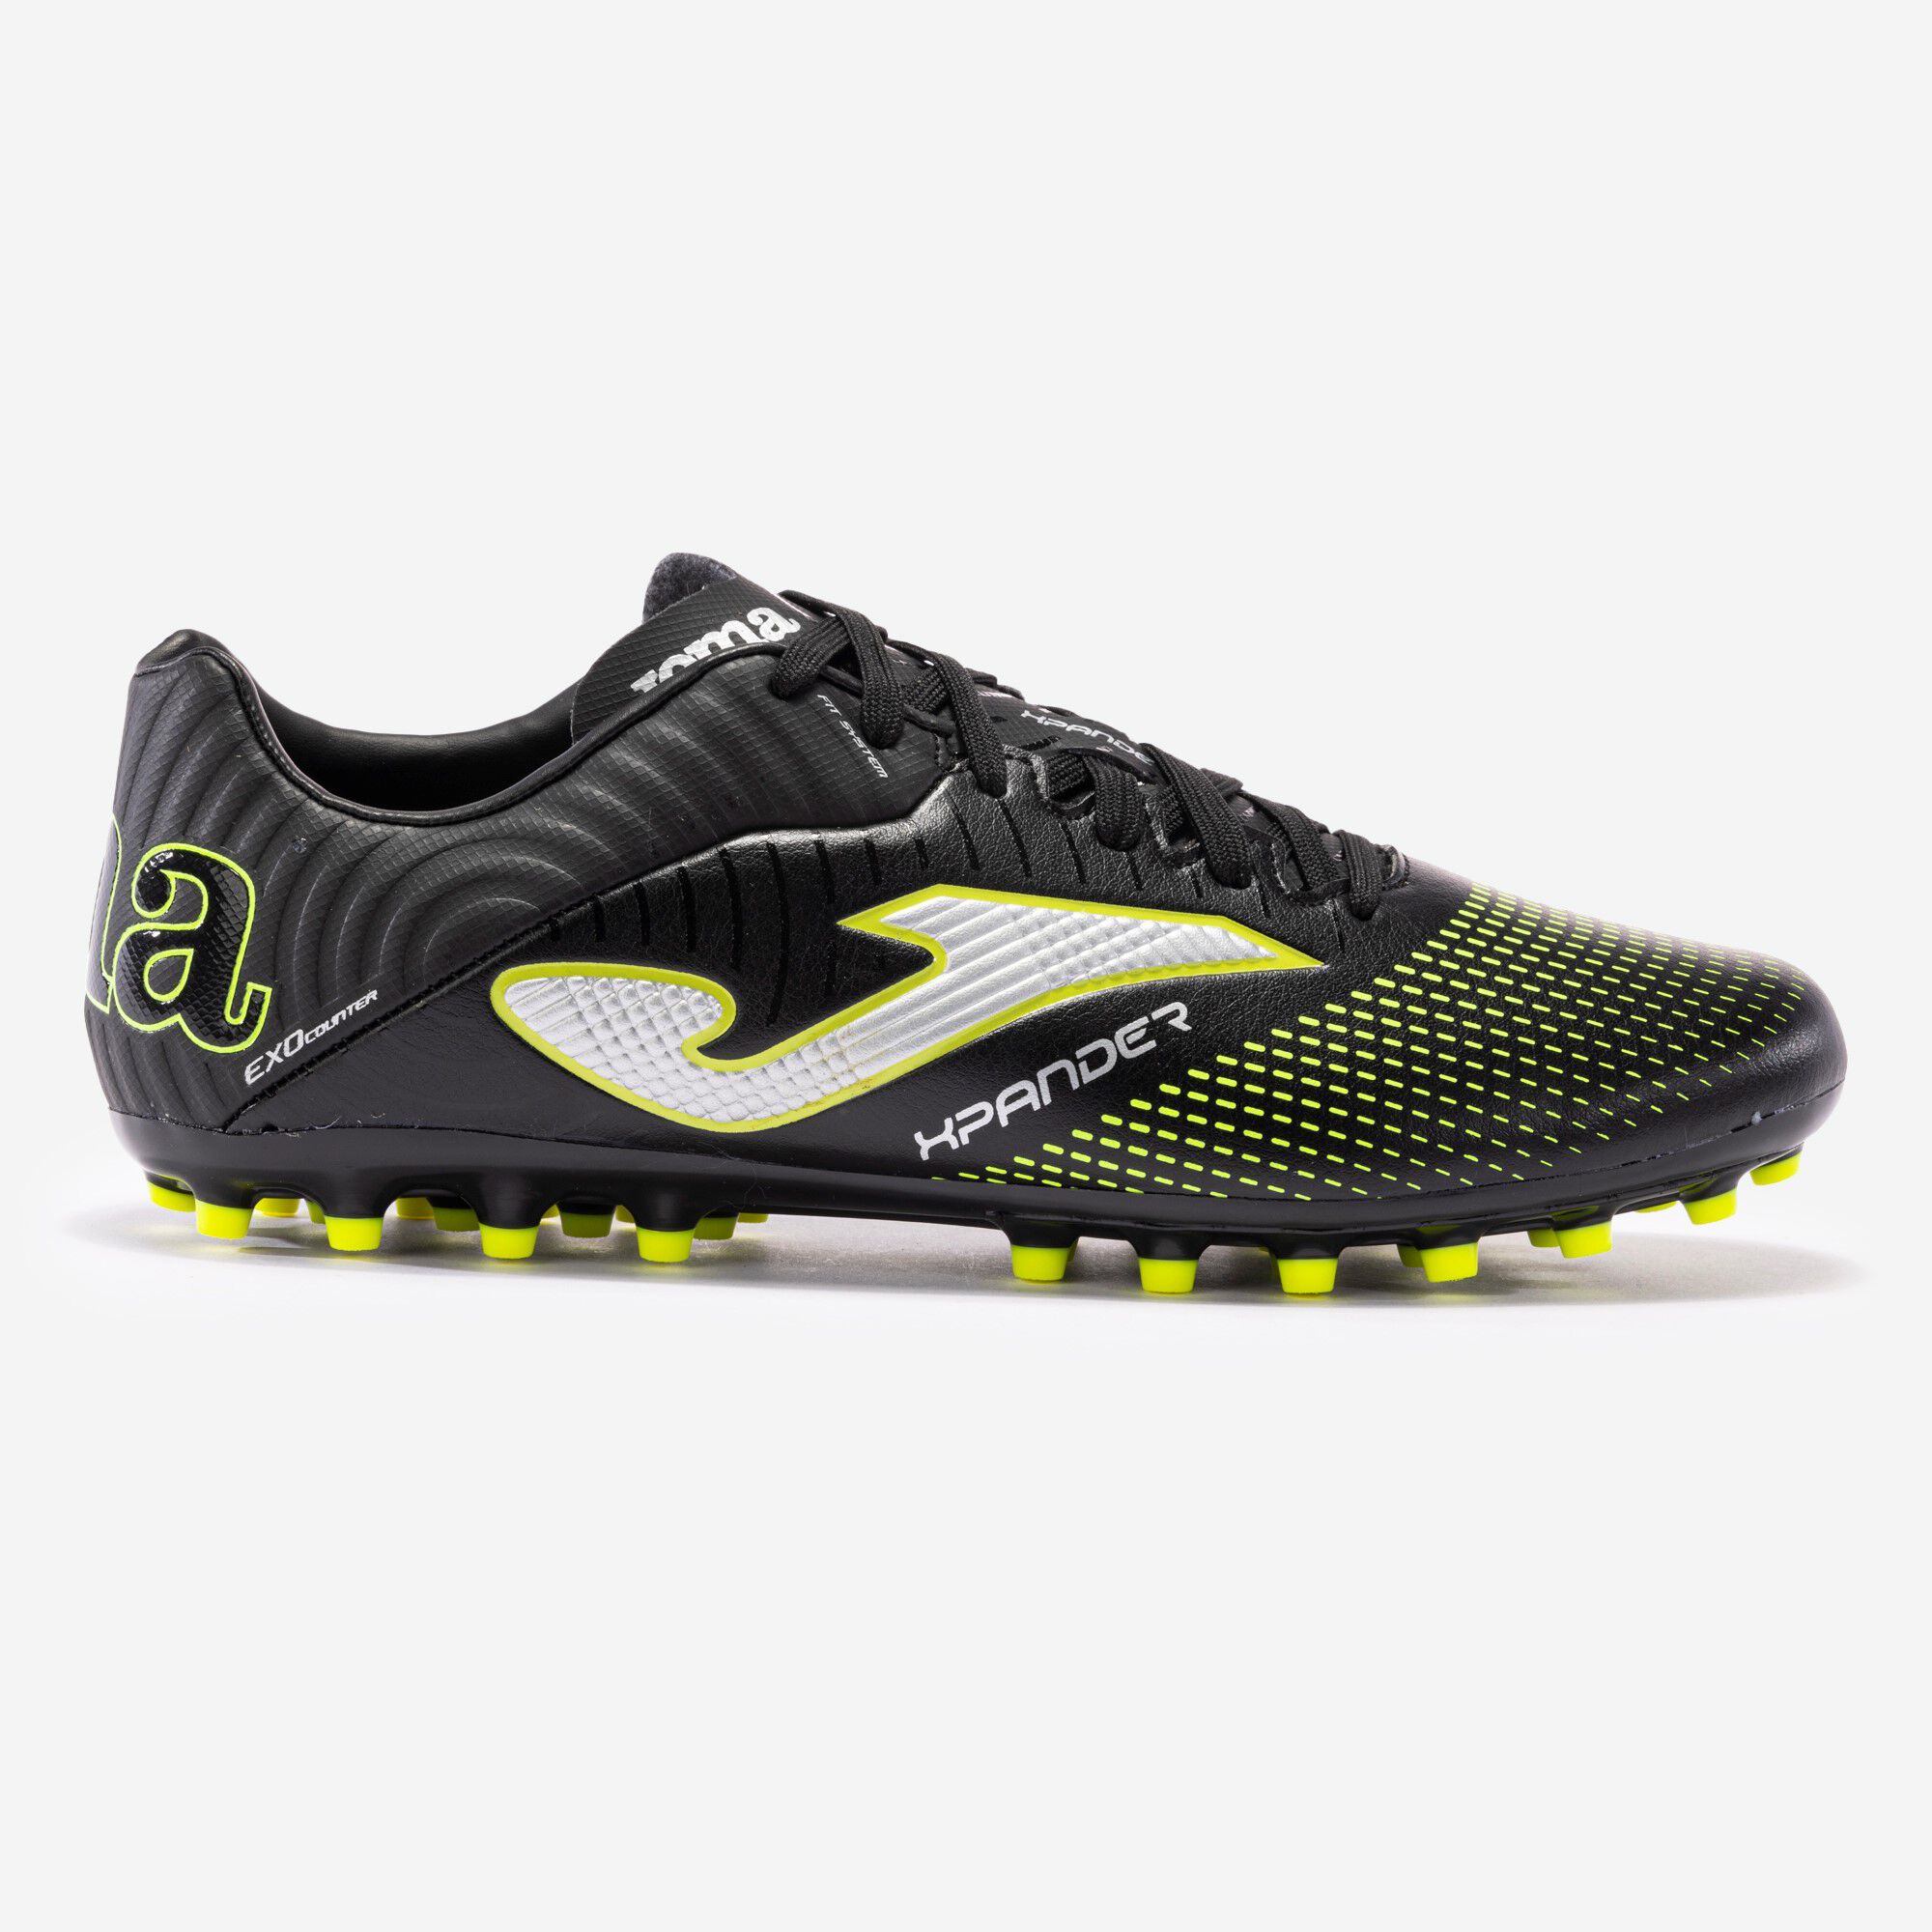 Chaussures football Xpander 23 gazon synthétique AG noir jaune fluo